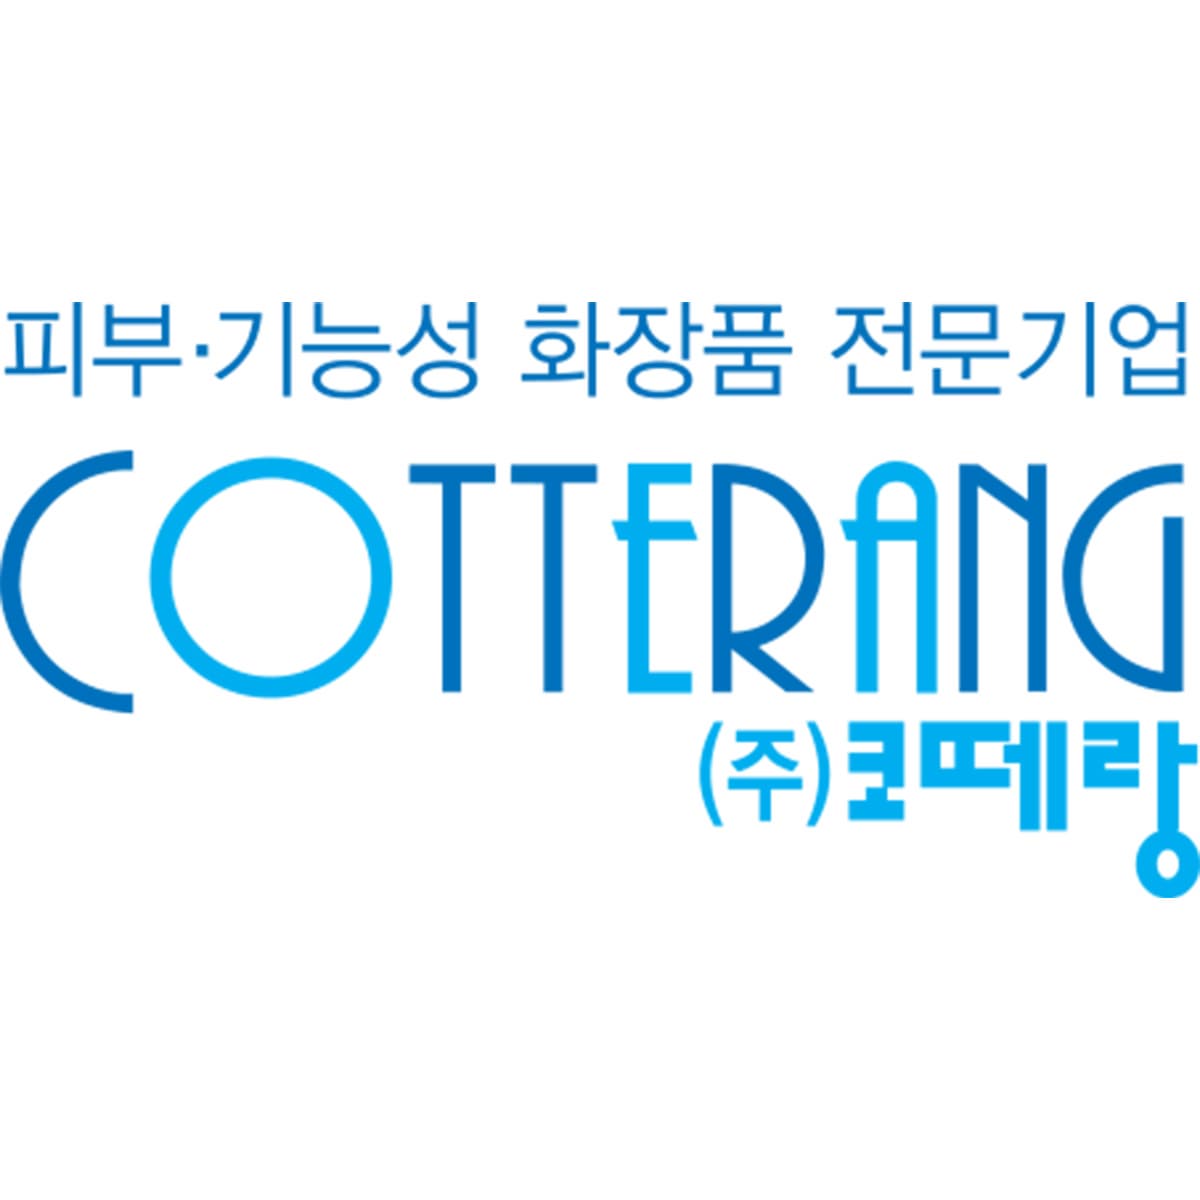 Cotterang Inc.